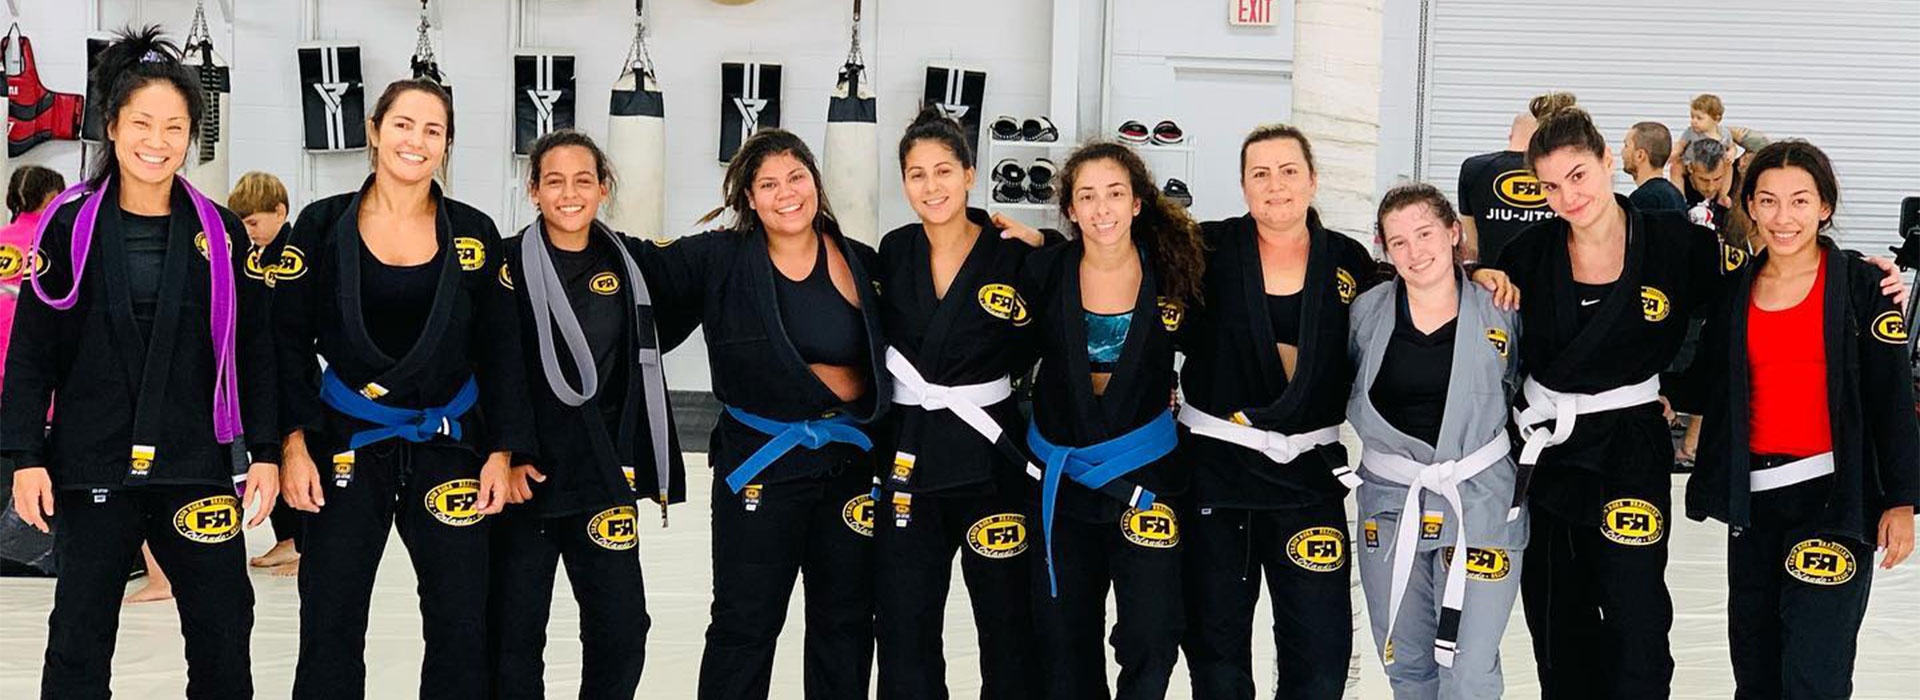 Women’s Only Brazilian Jiu Jitsu Program Near Me In Edgewood, Florida